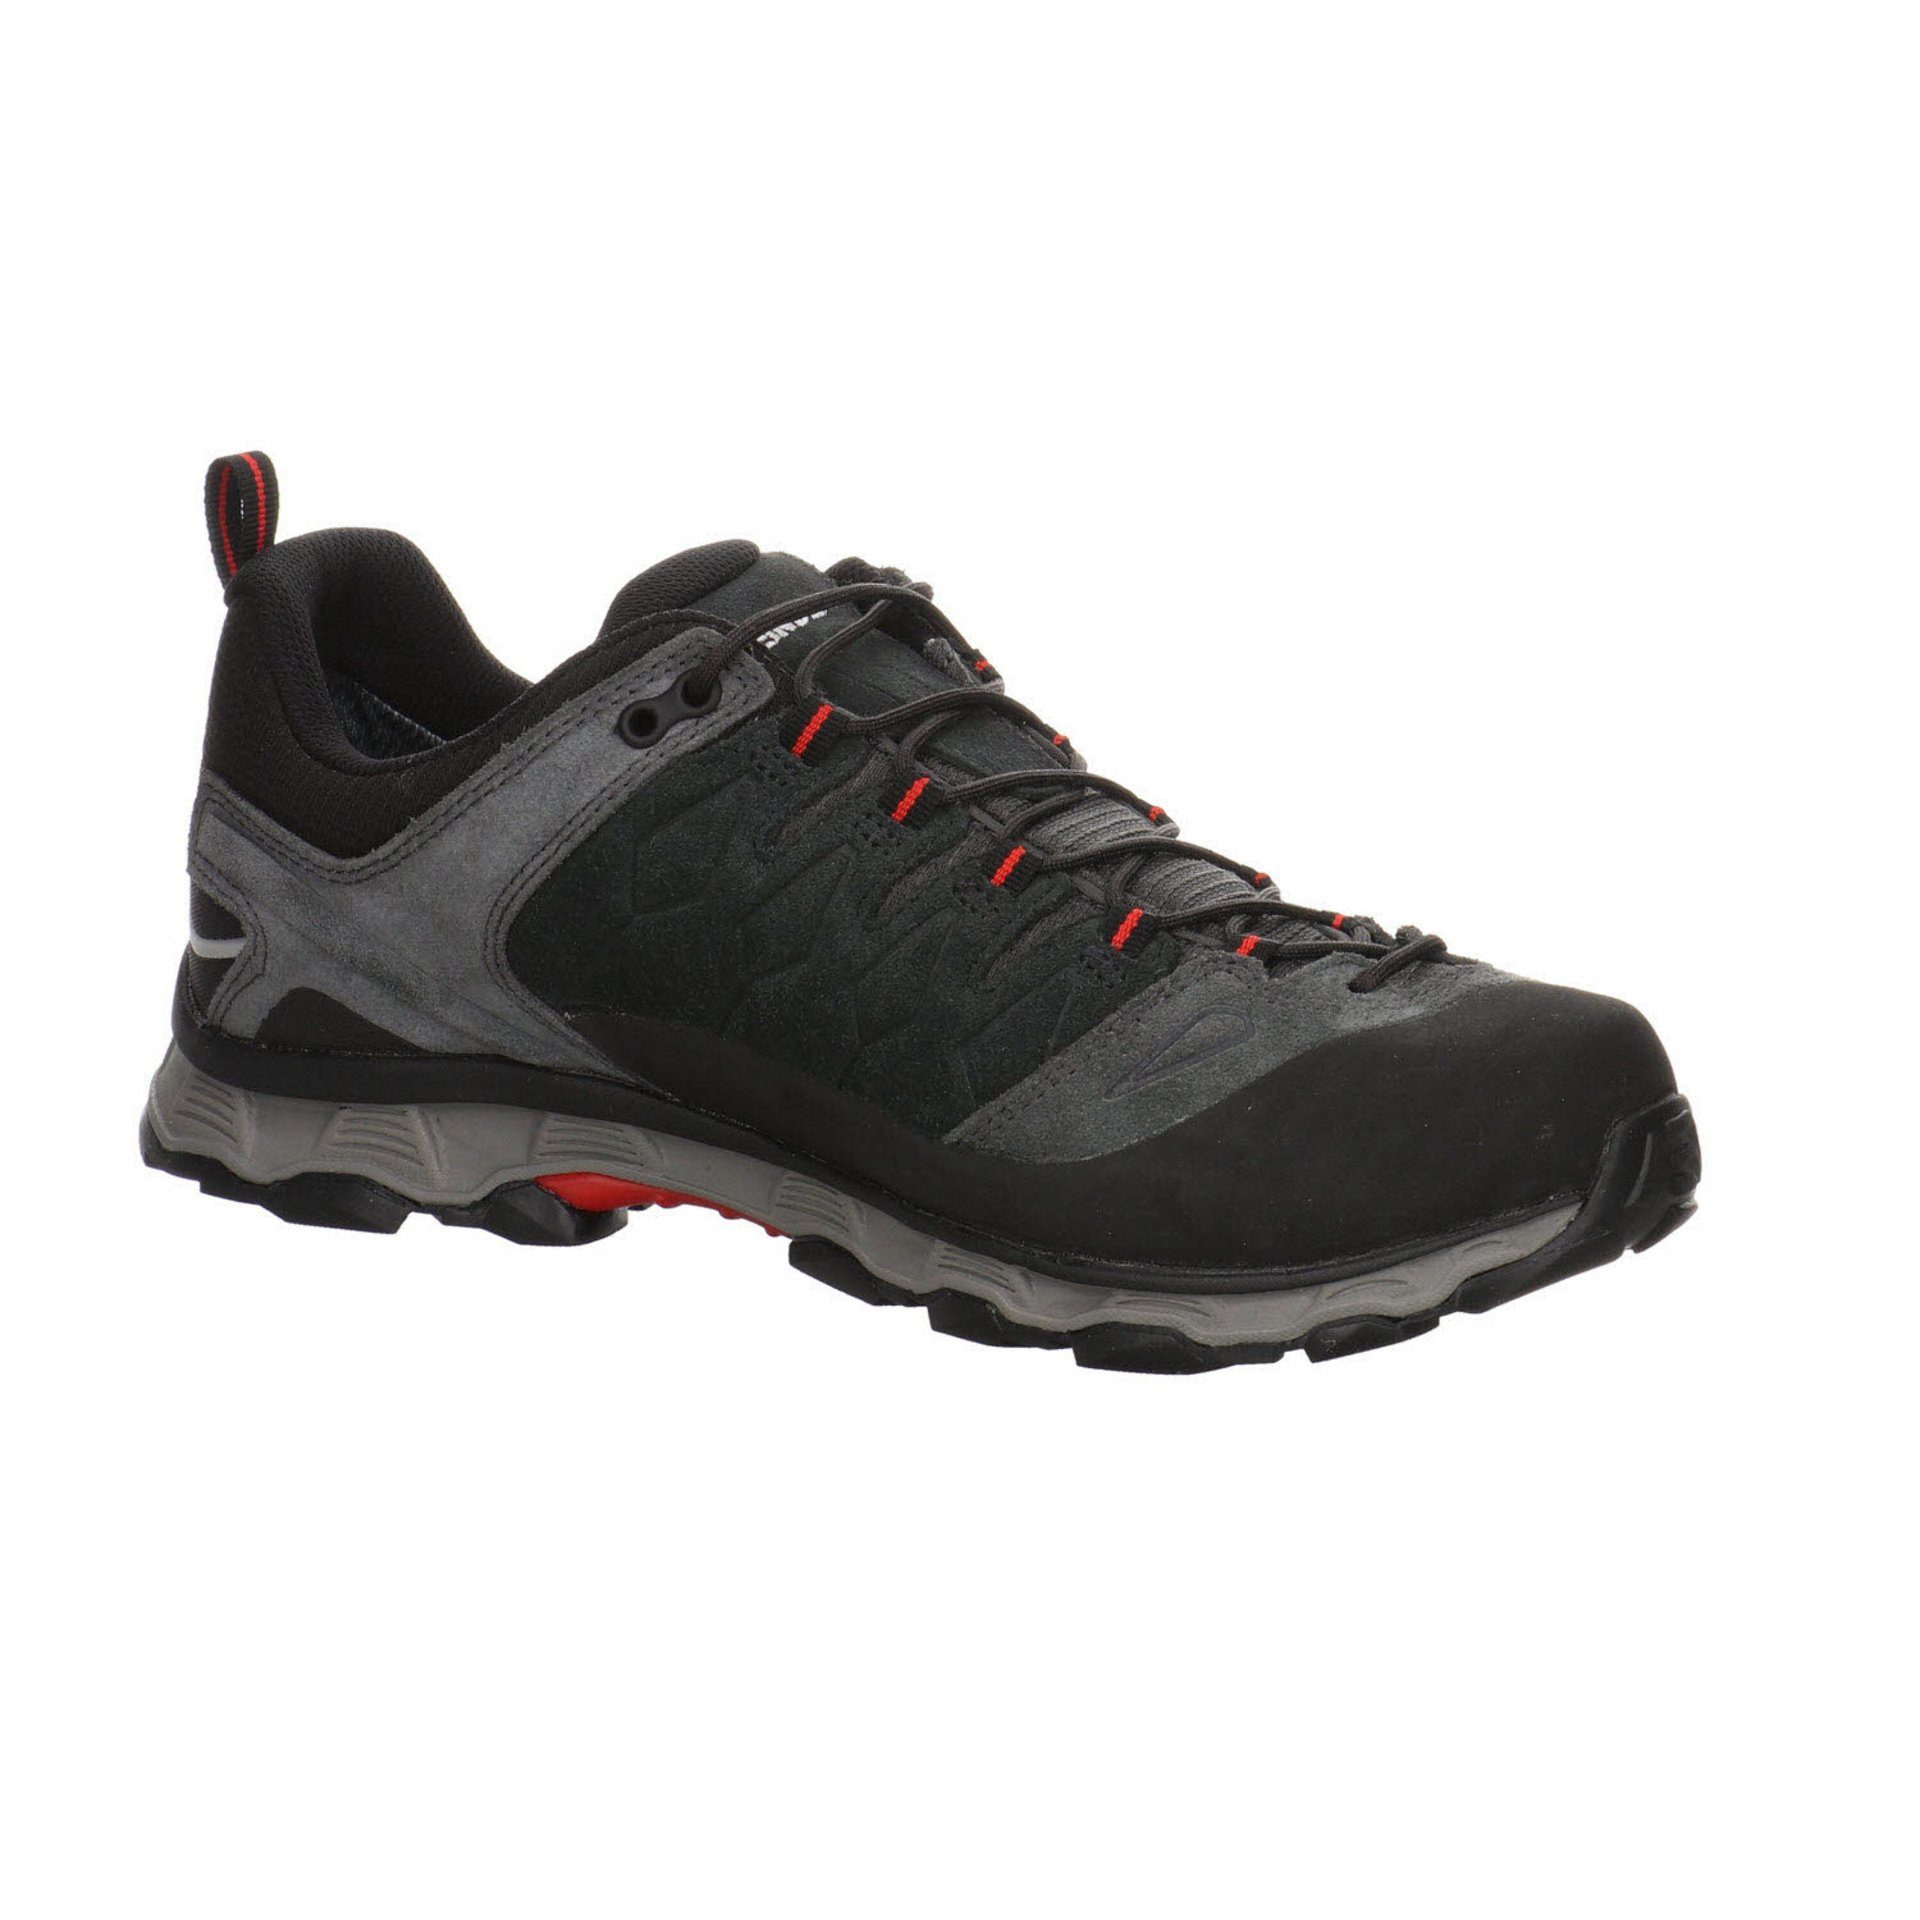 Meindl Herren Outdoorschuh Leder-/Textilkombination Outdoor GTX m Trail Lite kombiniert schwarz Schuhe Outdoorschuh